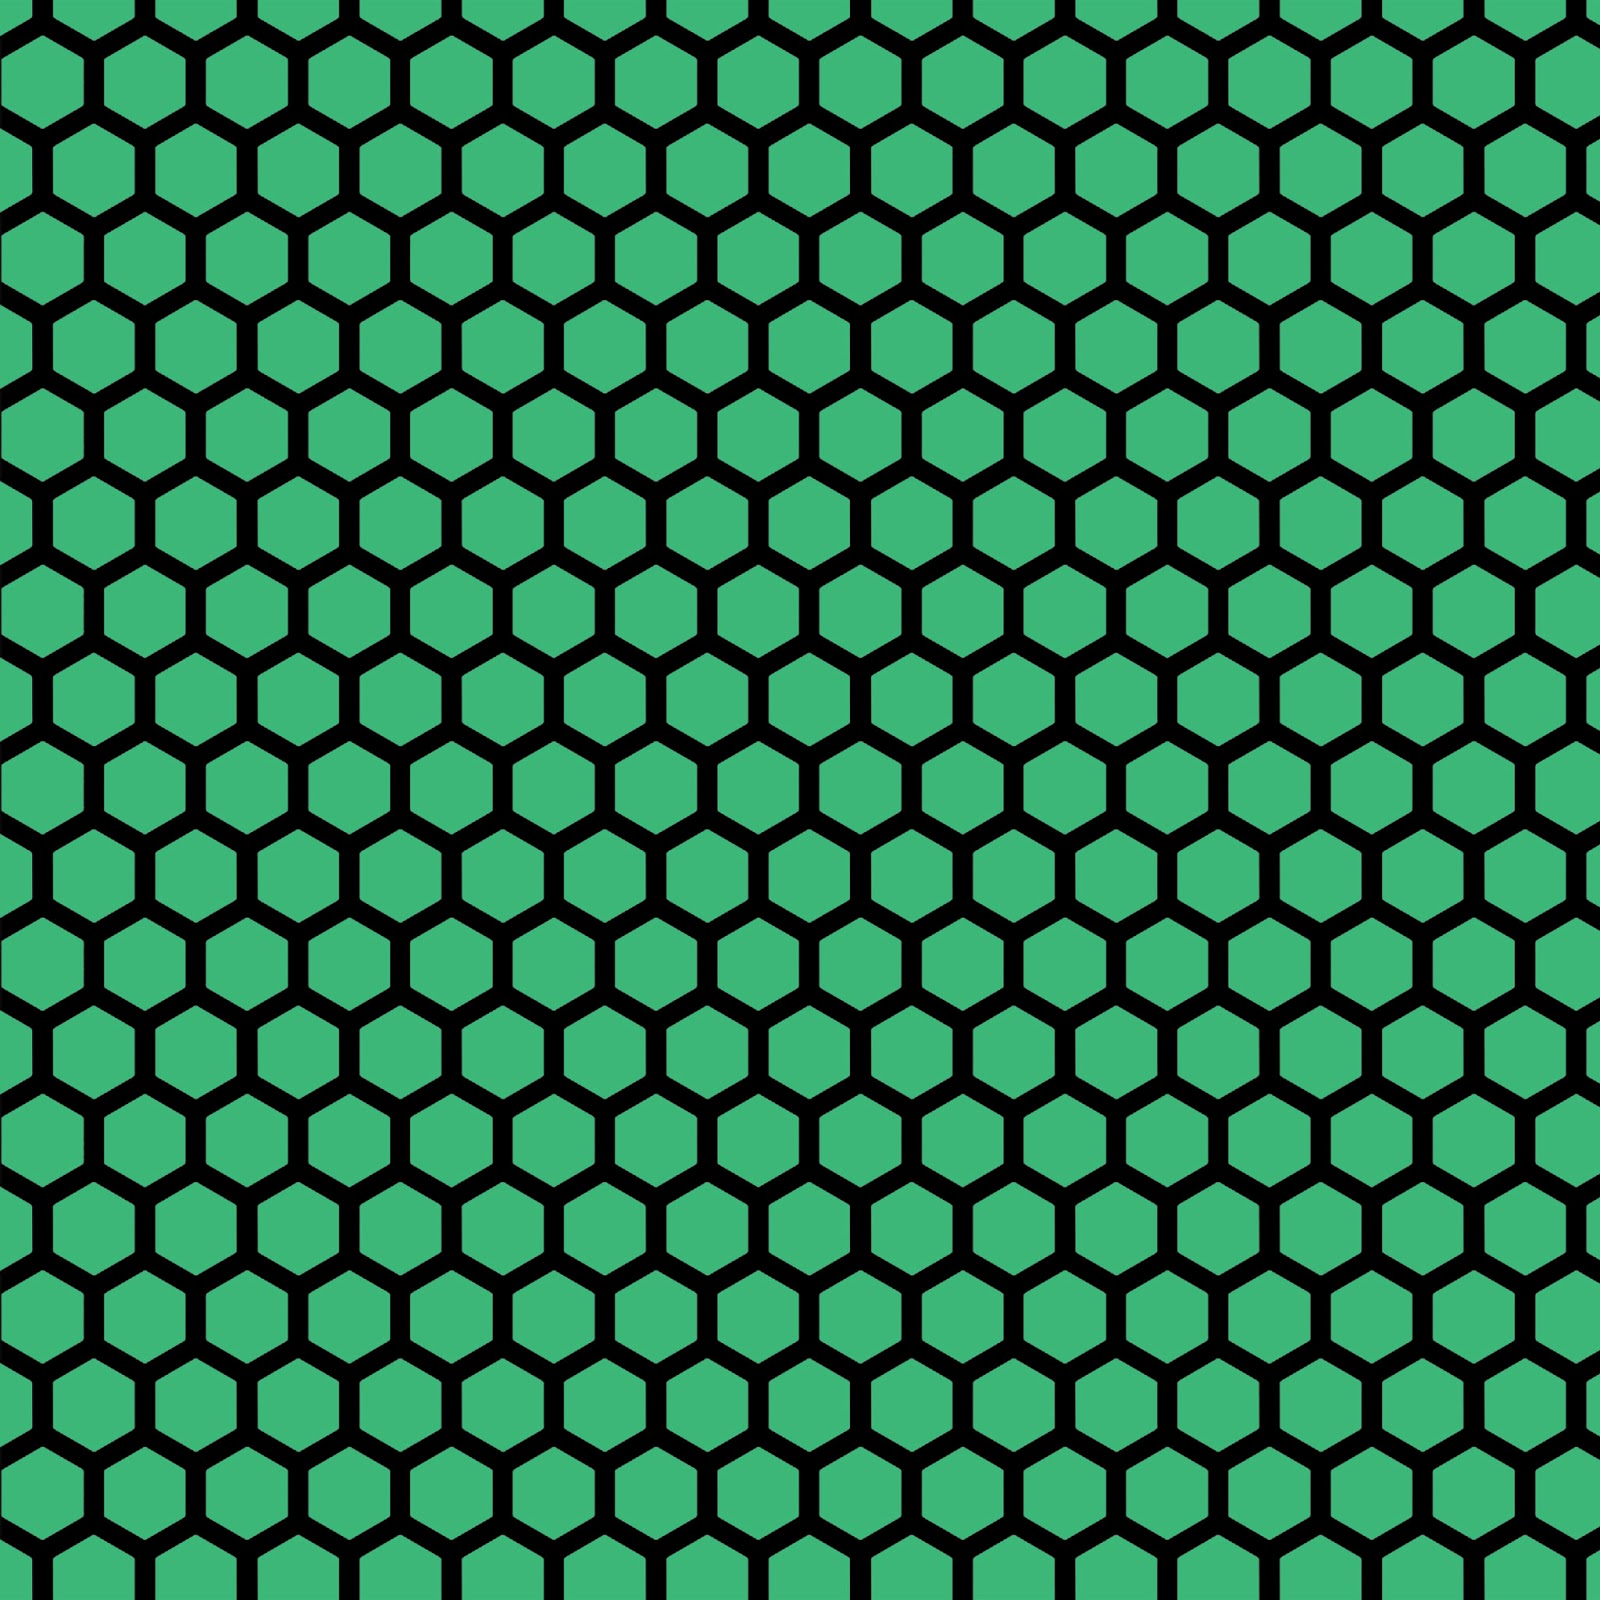 Kelly Green Honeyb Hexagon Background Pattern Wallpaper Bie Jpg